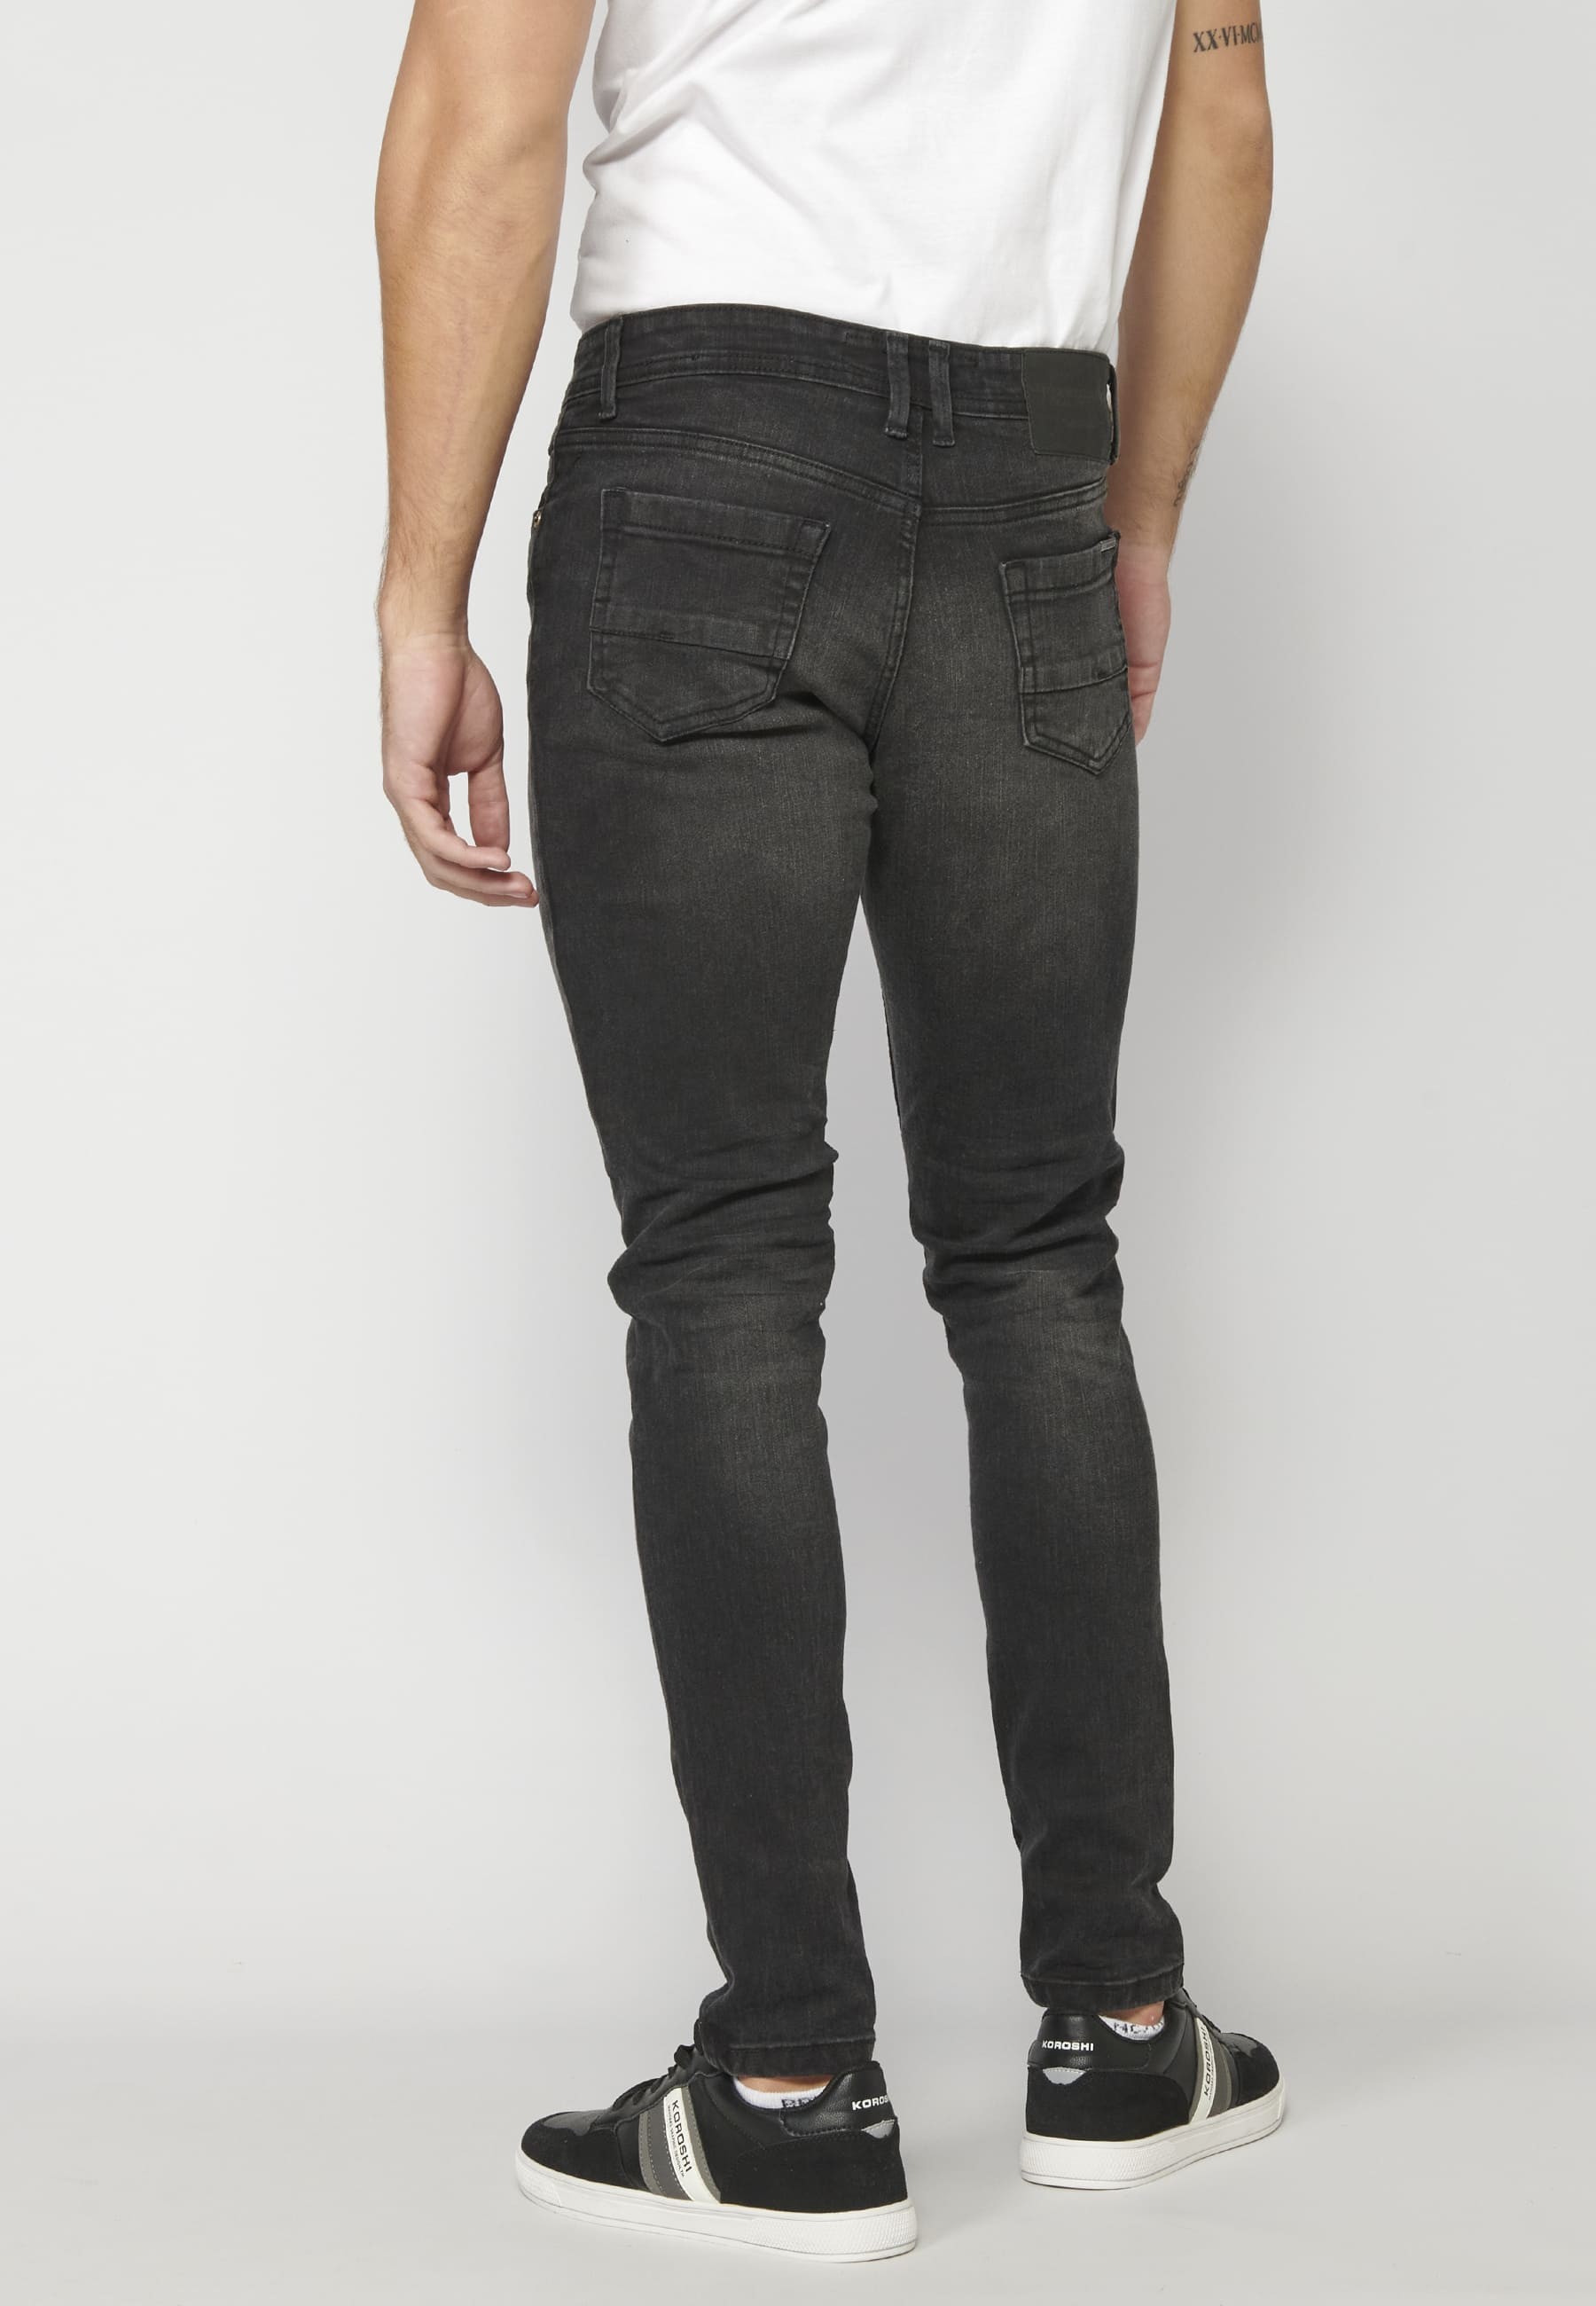 Black super skinny denim jean pants for Men